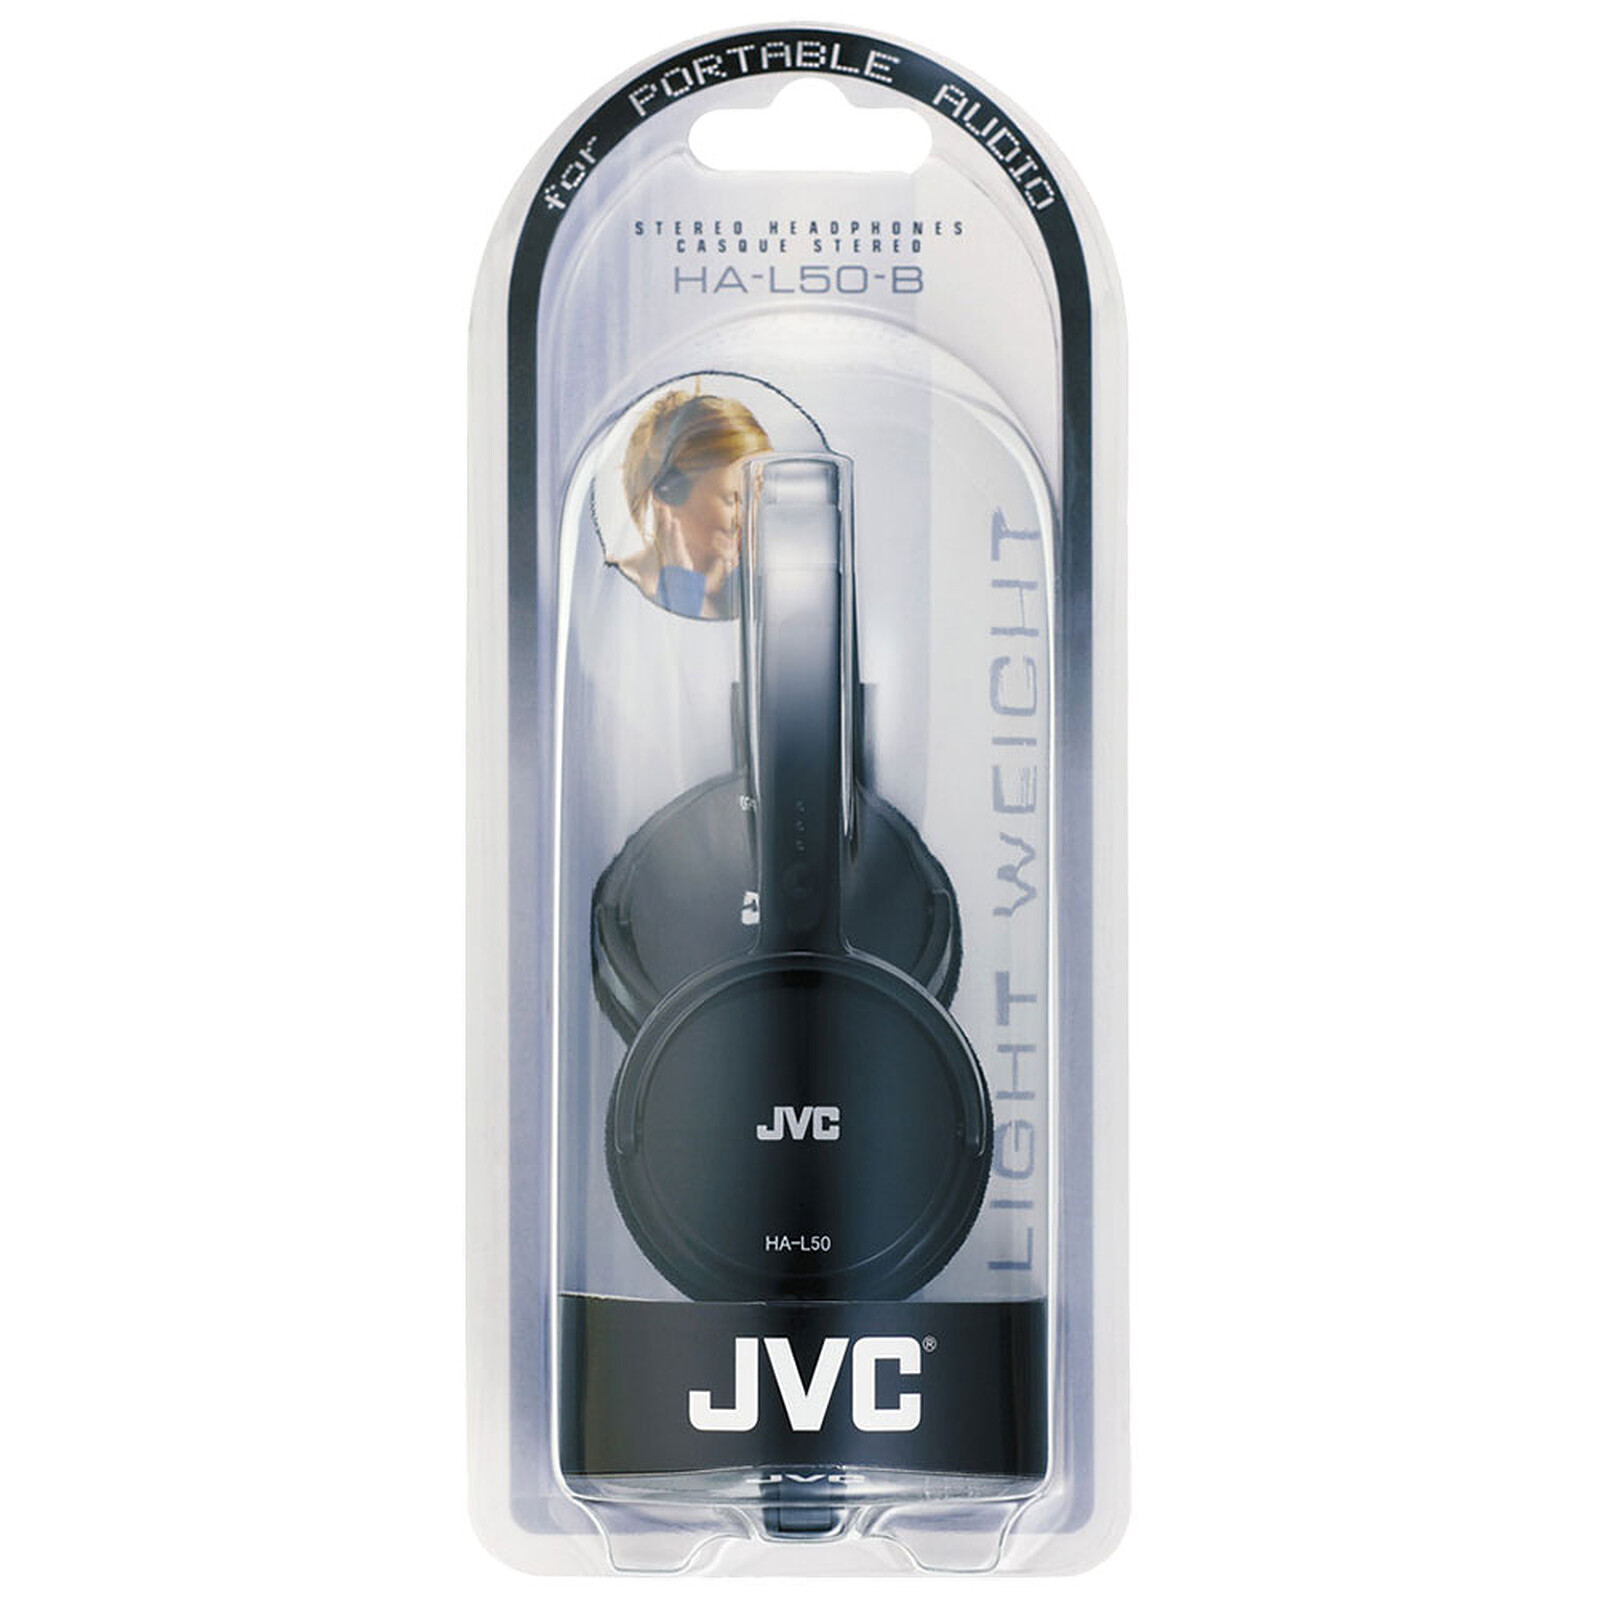 Casque HIFI arceau JVC HA-RX500 HiFi casque audio